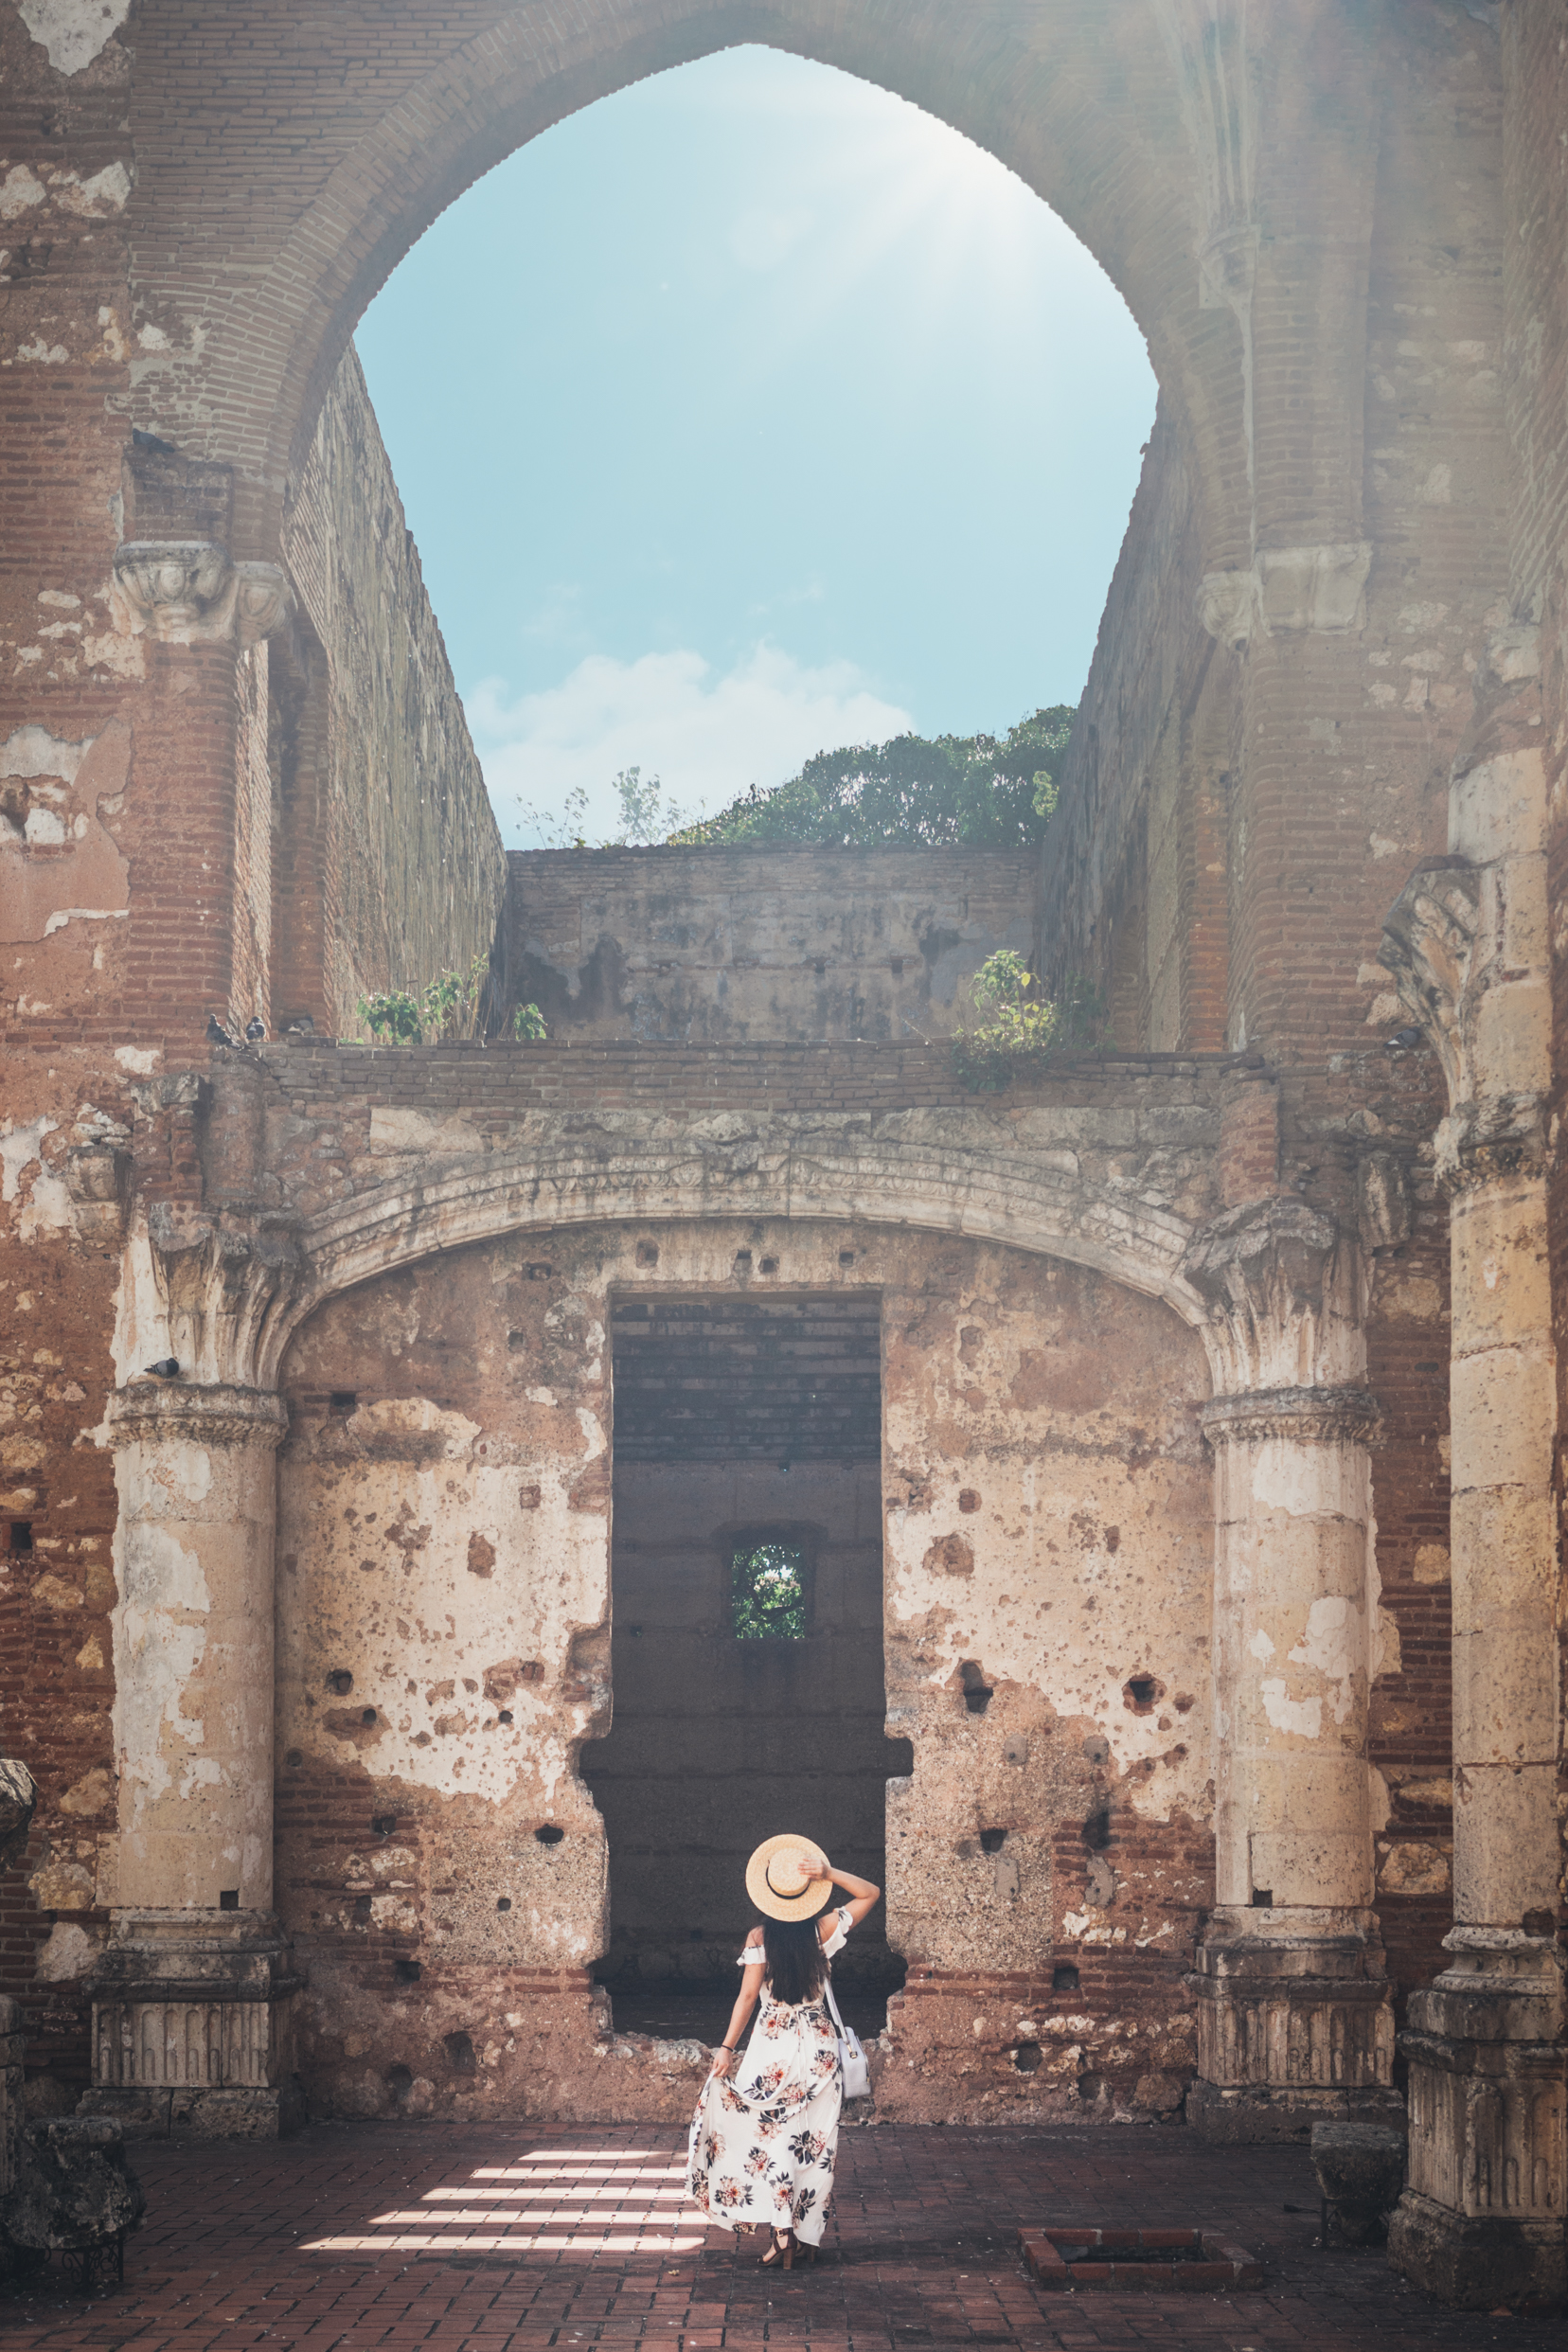 First monastery in America The New World- Santo Domingo, Dominican Republic historical landmark 